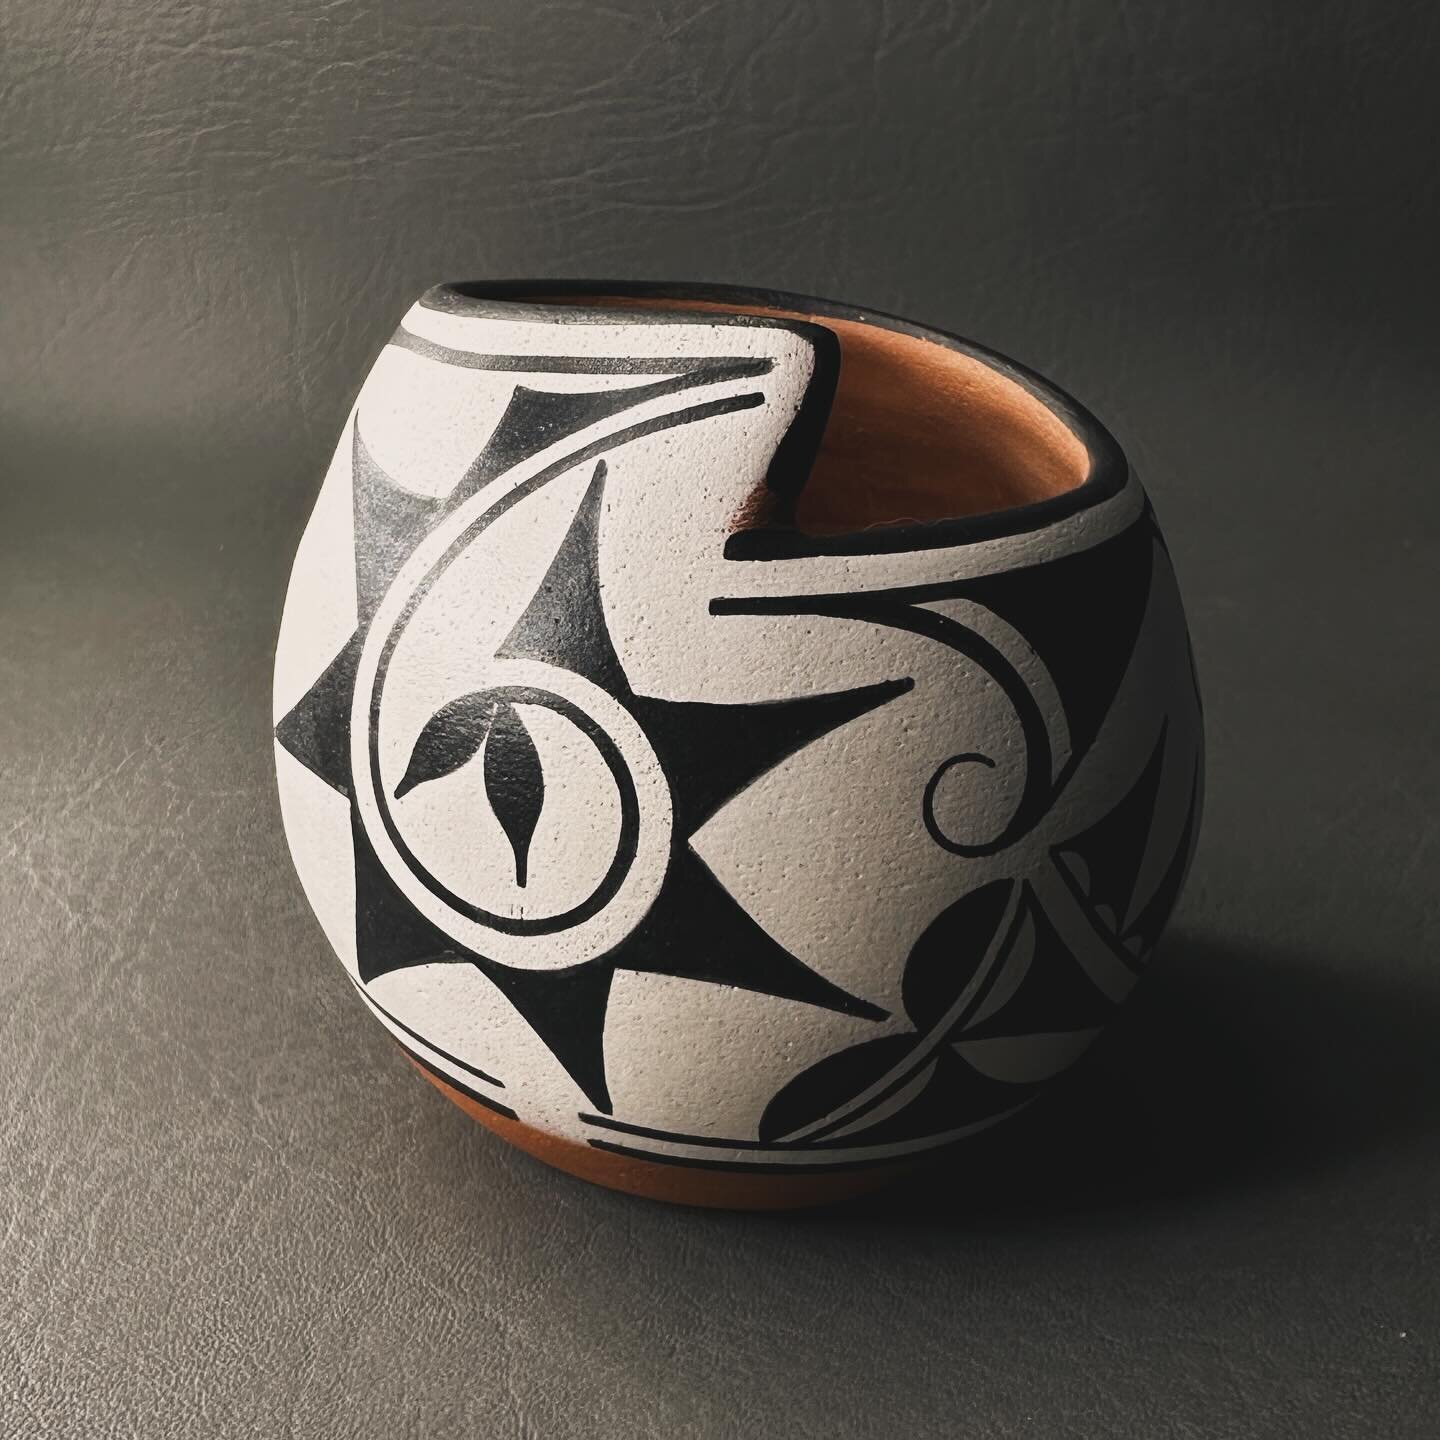 Parallax #jeffsuinaart #cochiti #cochitipueblo #newmexico #santafe #ceramicart #ceramic #nativeamericanart #nativeamerican #indigenousart #nativeamericanartist #pottery #ceramics #unm #contemporaryart #modernart #clay #igsouthwest